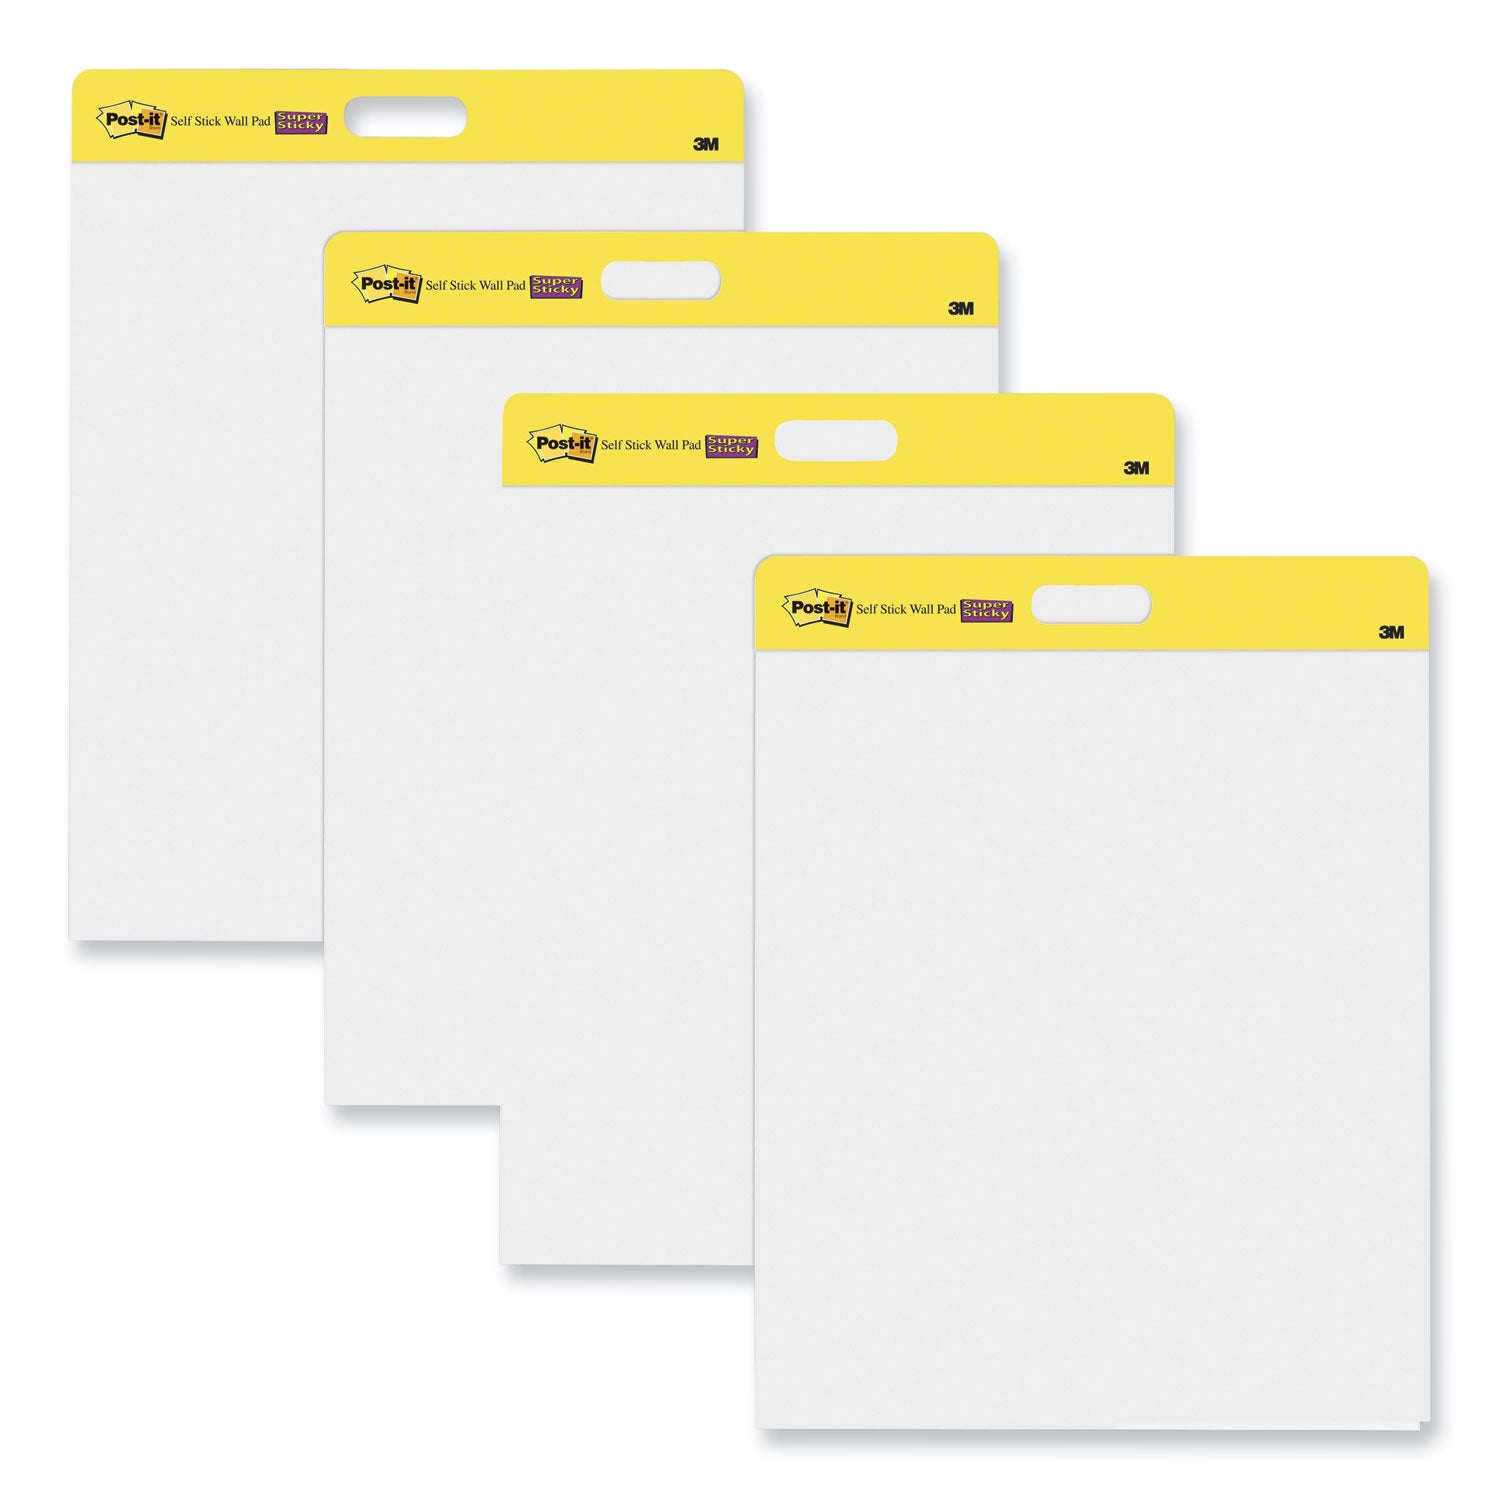 Self-Stick Wall Pad, Unruled, 20 x 23, White, 20 Sheets/Pad, 2 Pads/Pack, 2 Packs/Carton - 